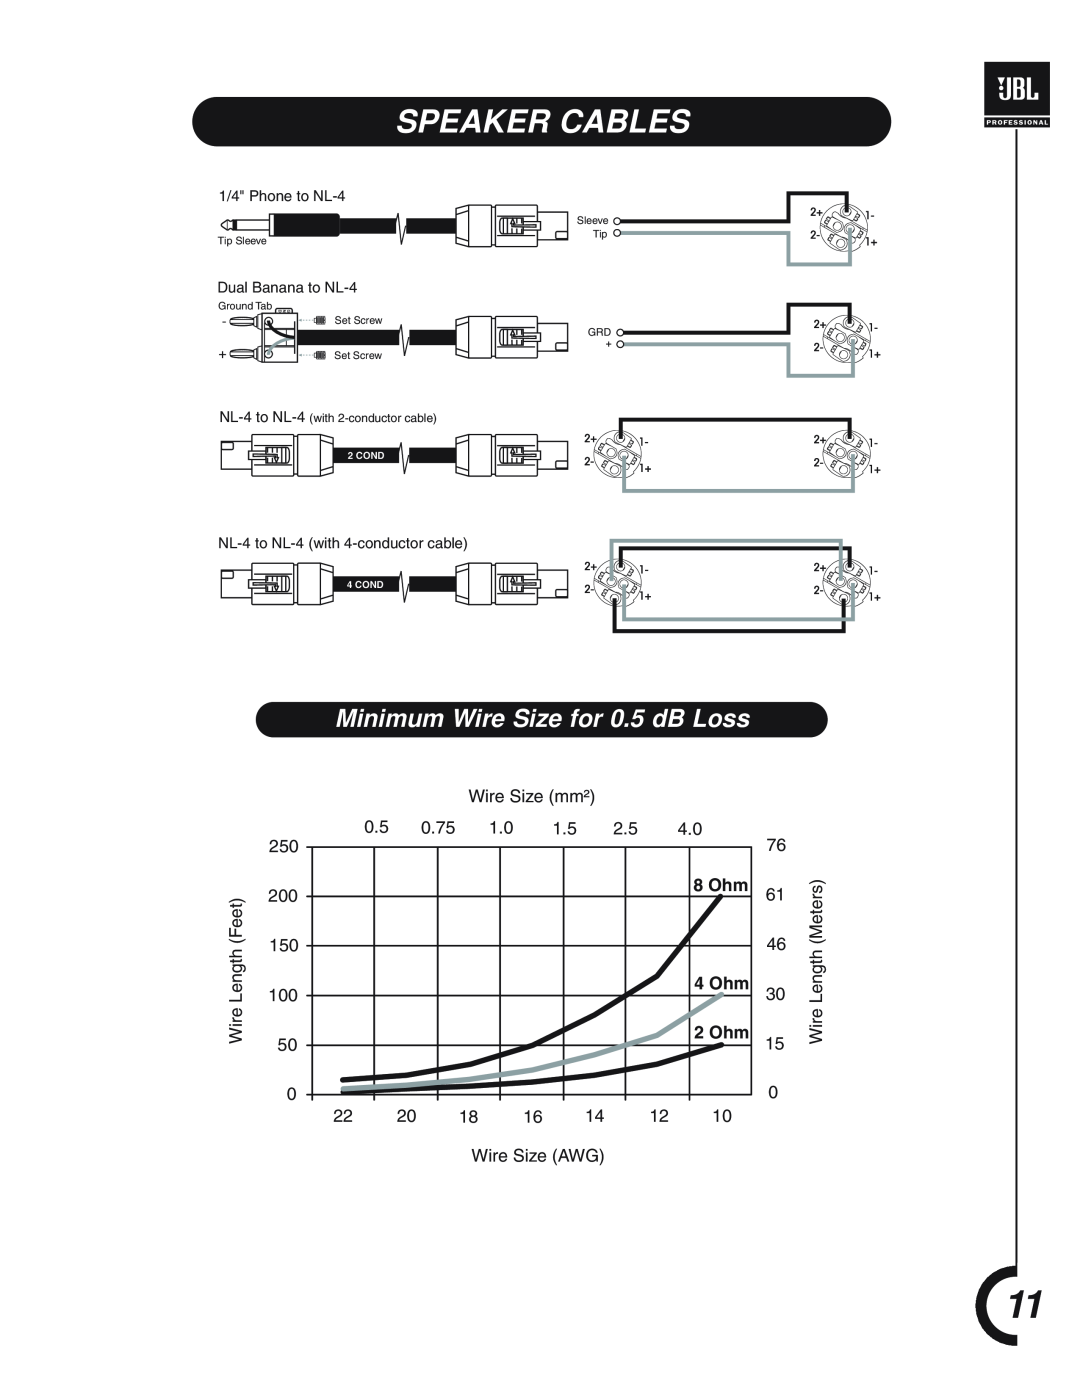 JBL MPro 400 manual Speaker Cables, Minimum Wire Size for 0.5 dB Loss, 8 Ohm, 4 Ohm, 2 Ohm 